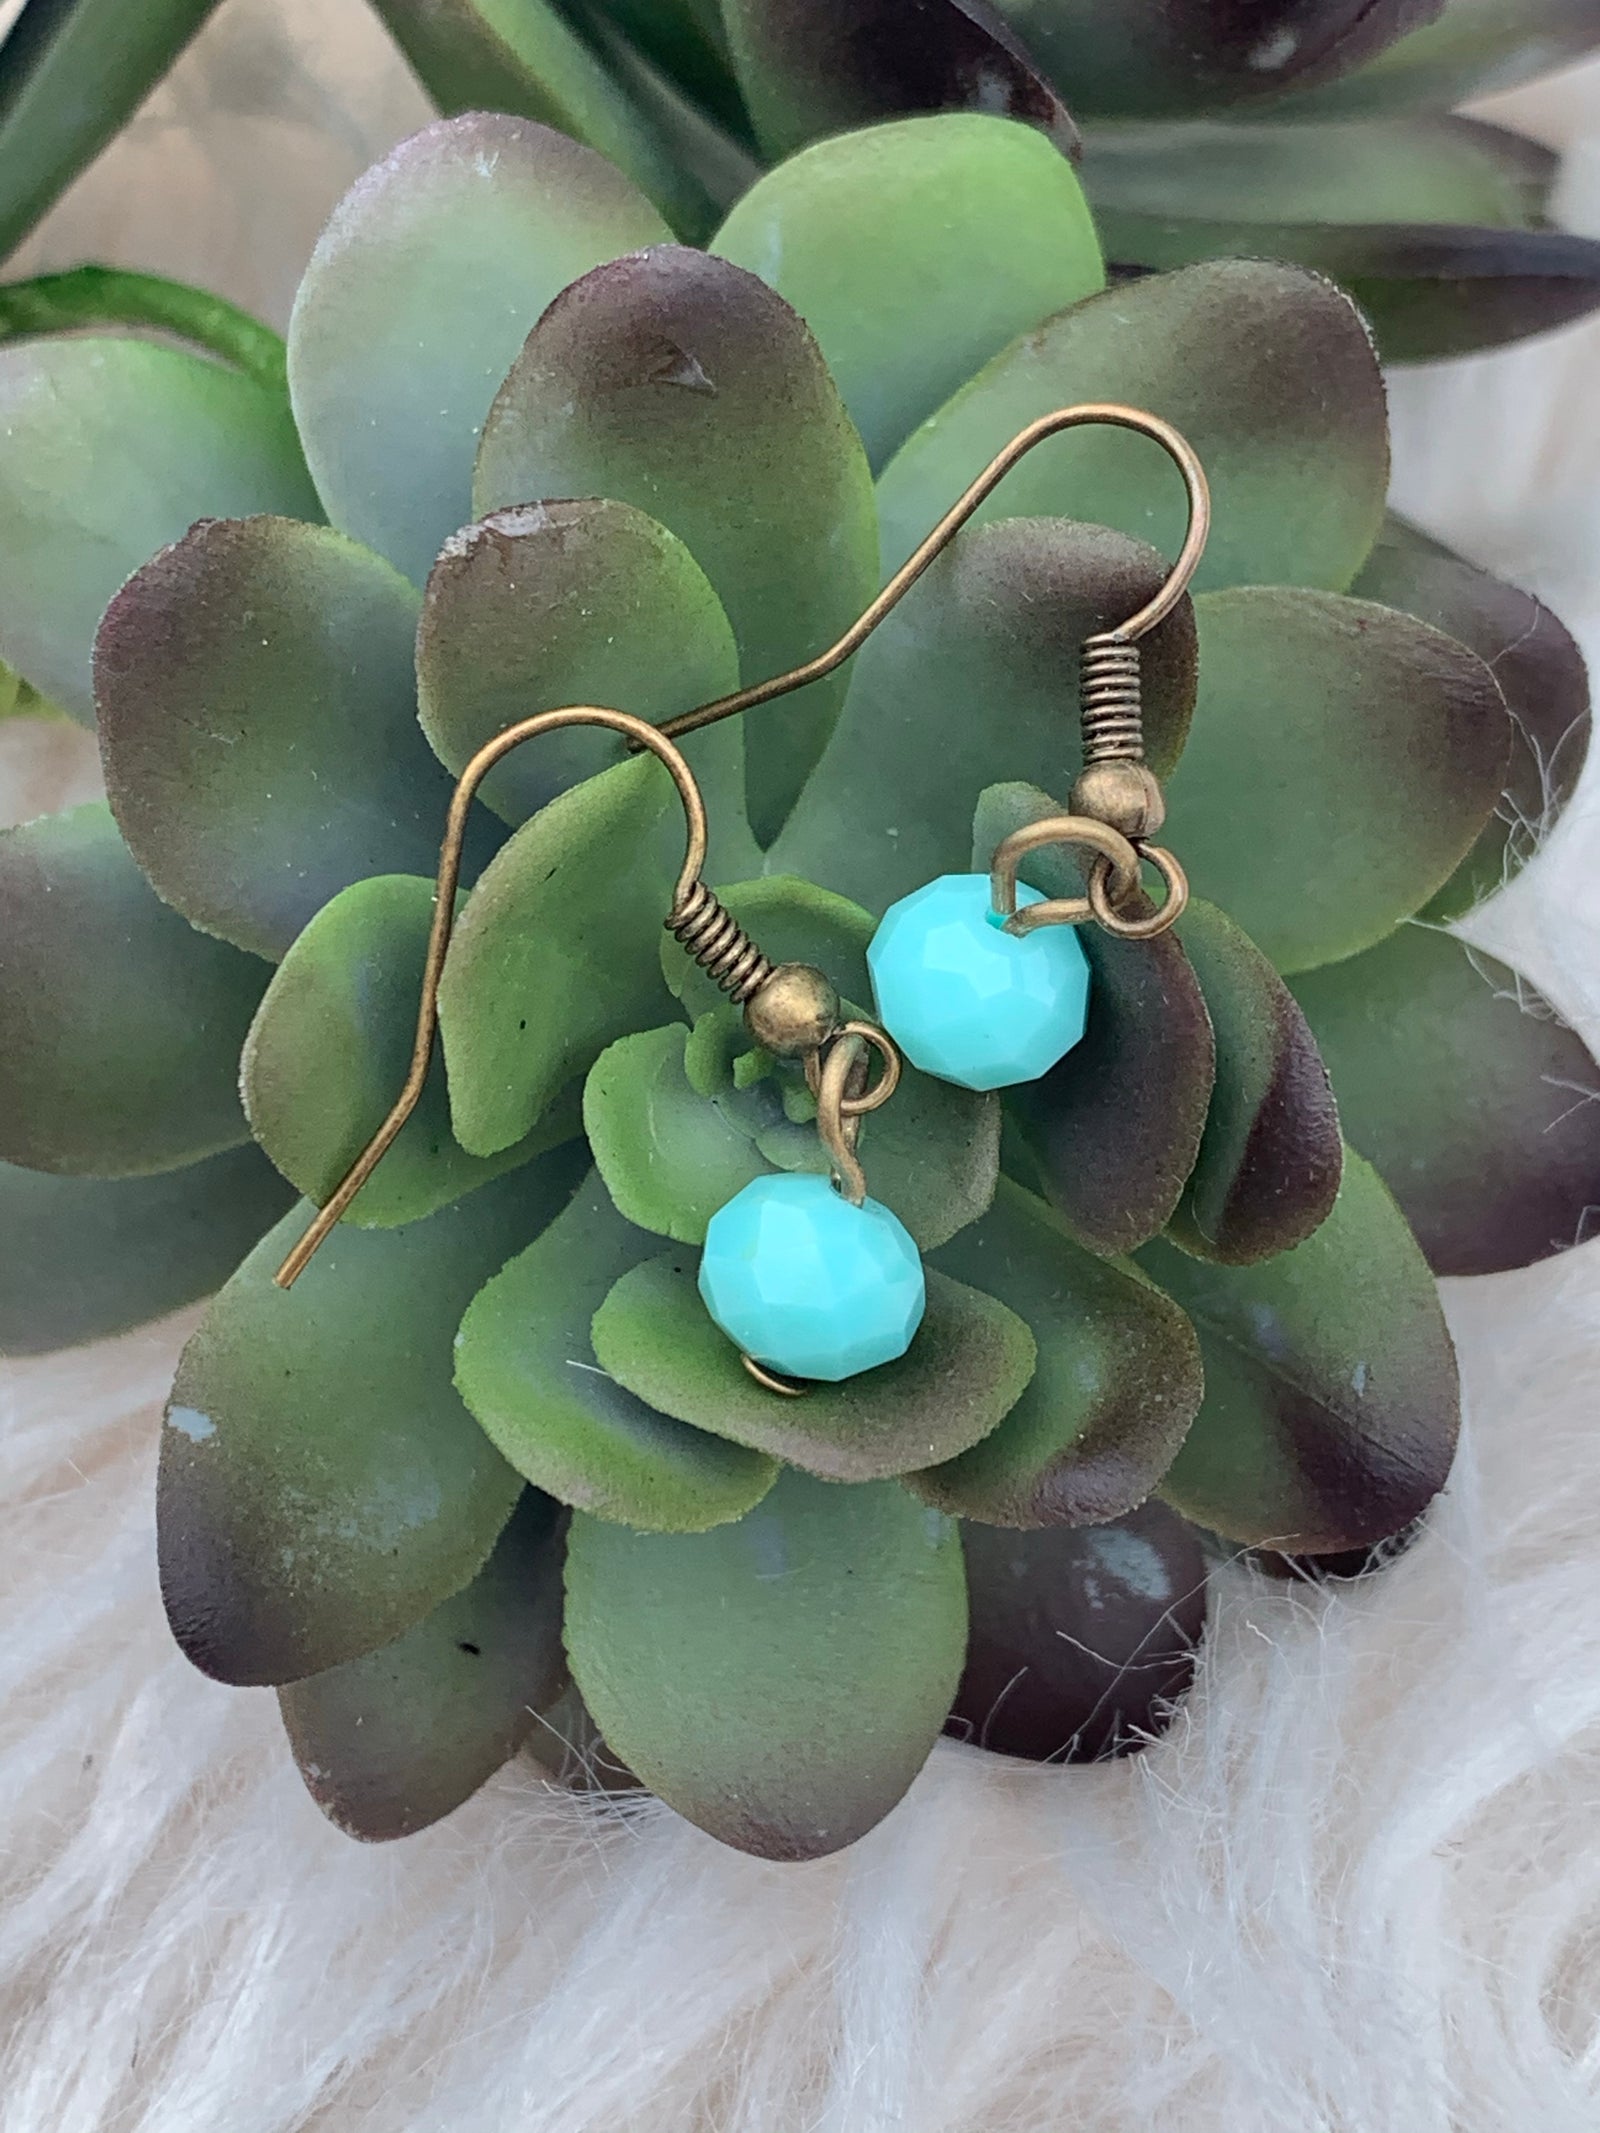 Layered Beaded Turquoise Tassel Necklace Set